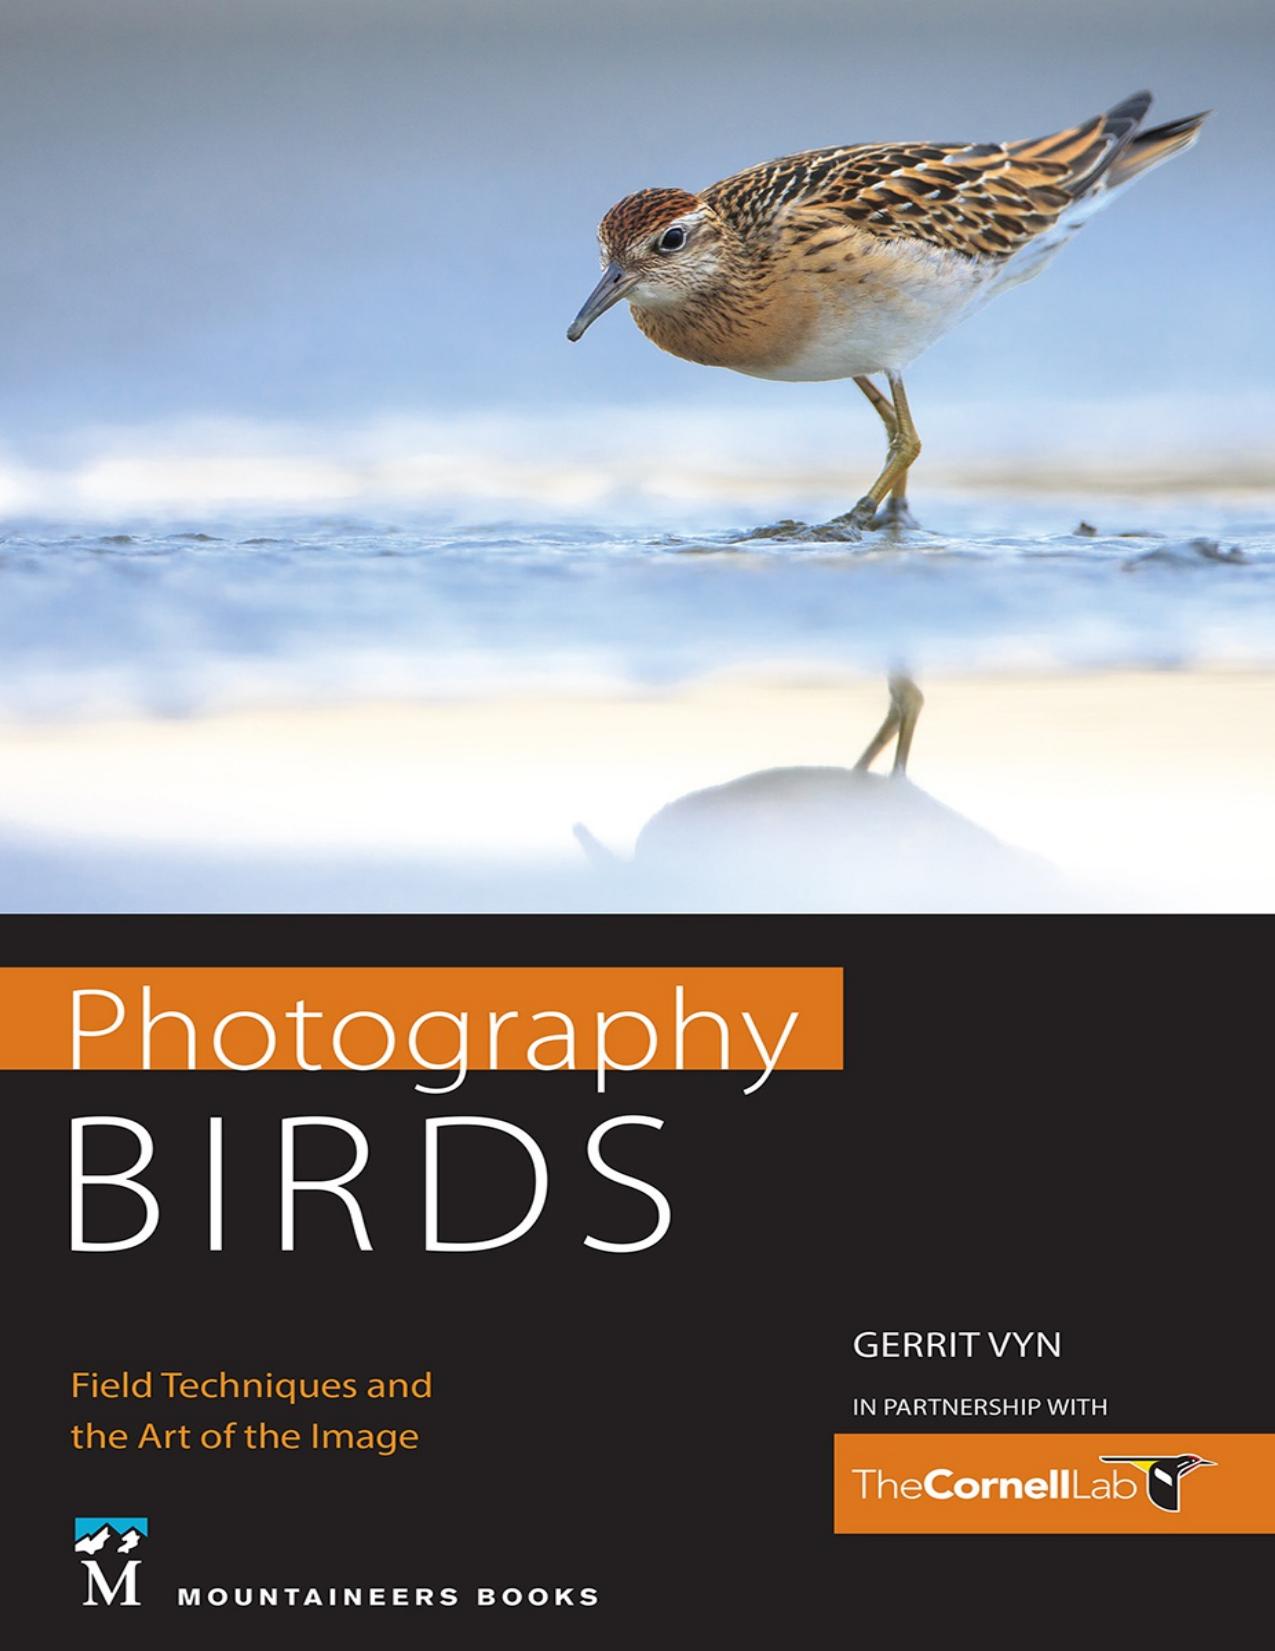 Photography Birds by Gerrit Vyn